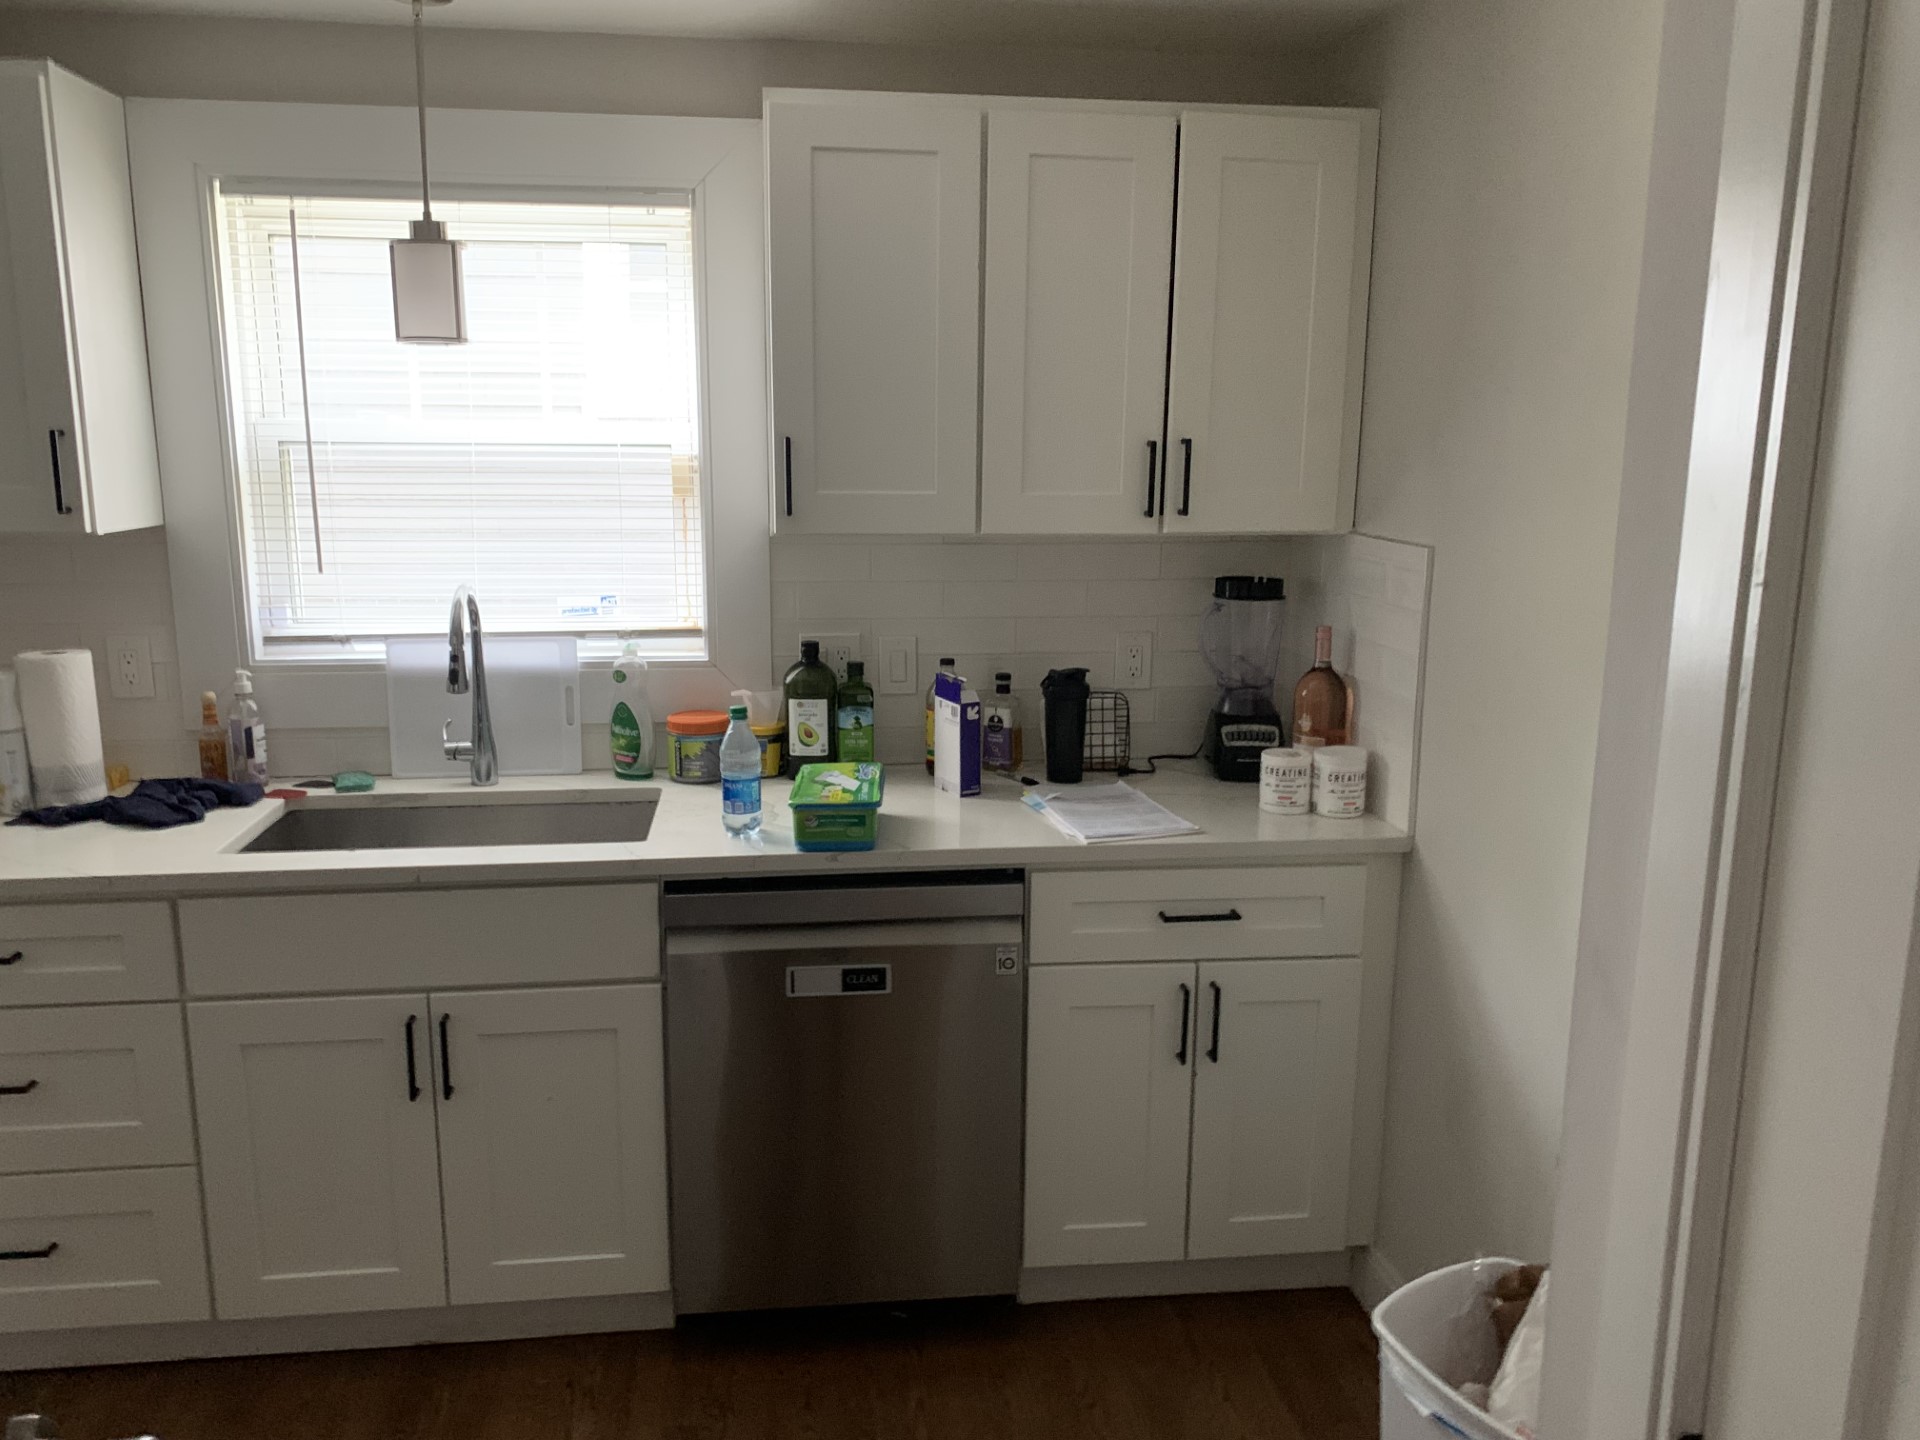 Photos of apartment on Gerald,Boston MA 02135